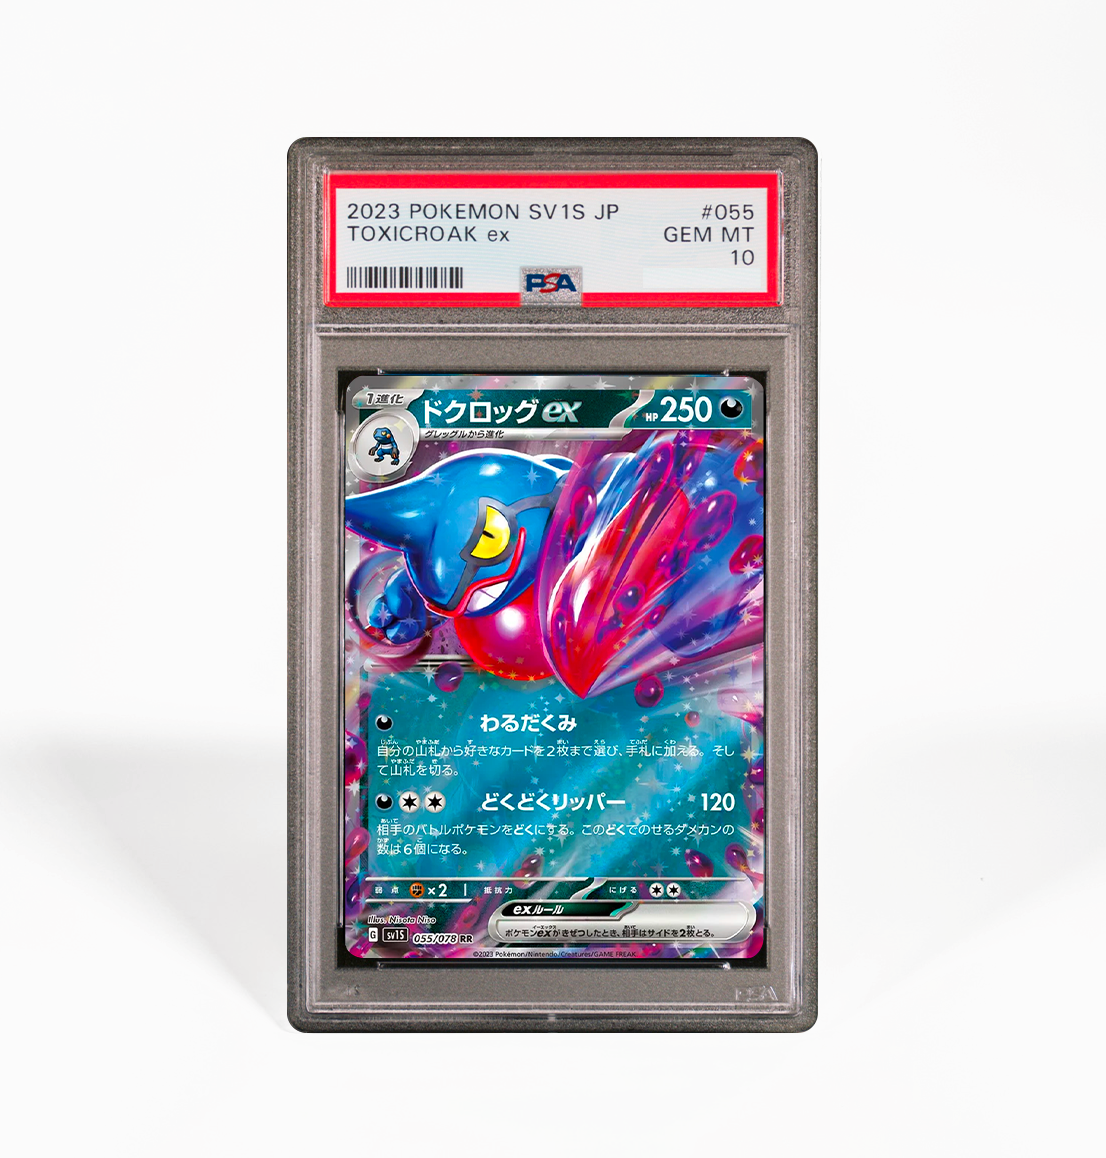 PSA 10 Toxicroak ex #055 Scarlet ex SV1S Japanese Pokemon card